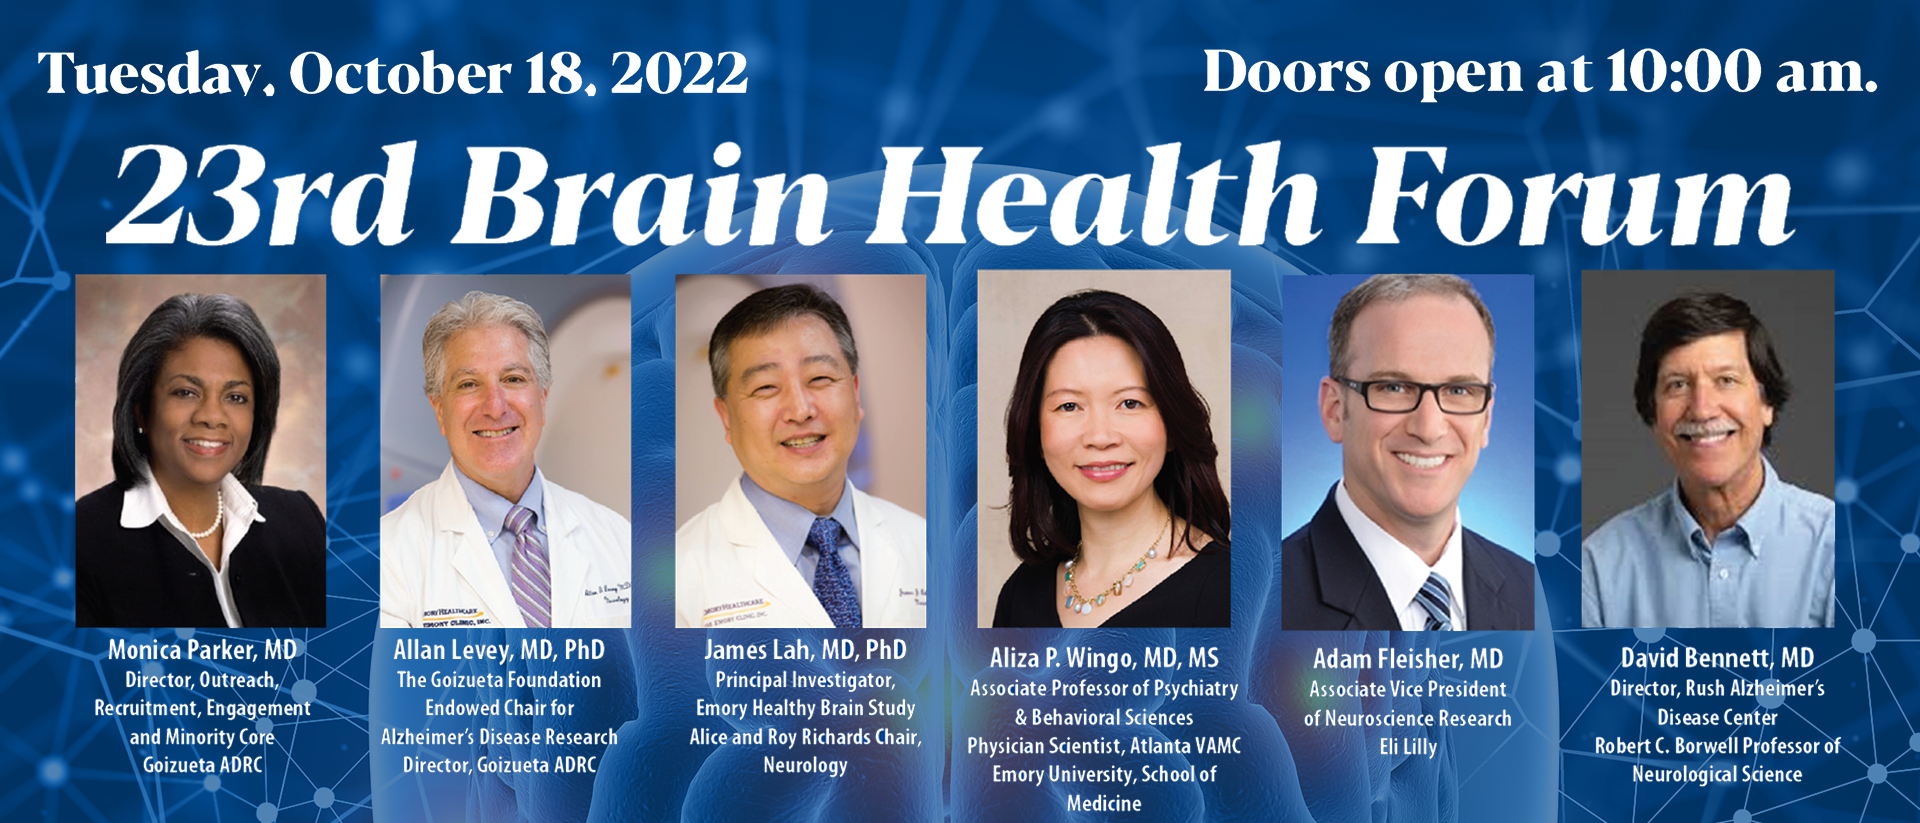 23rd Brain Health Forum on Tuesday, October 18, 2022